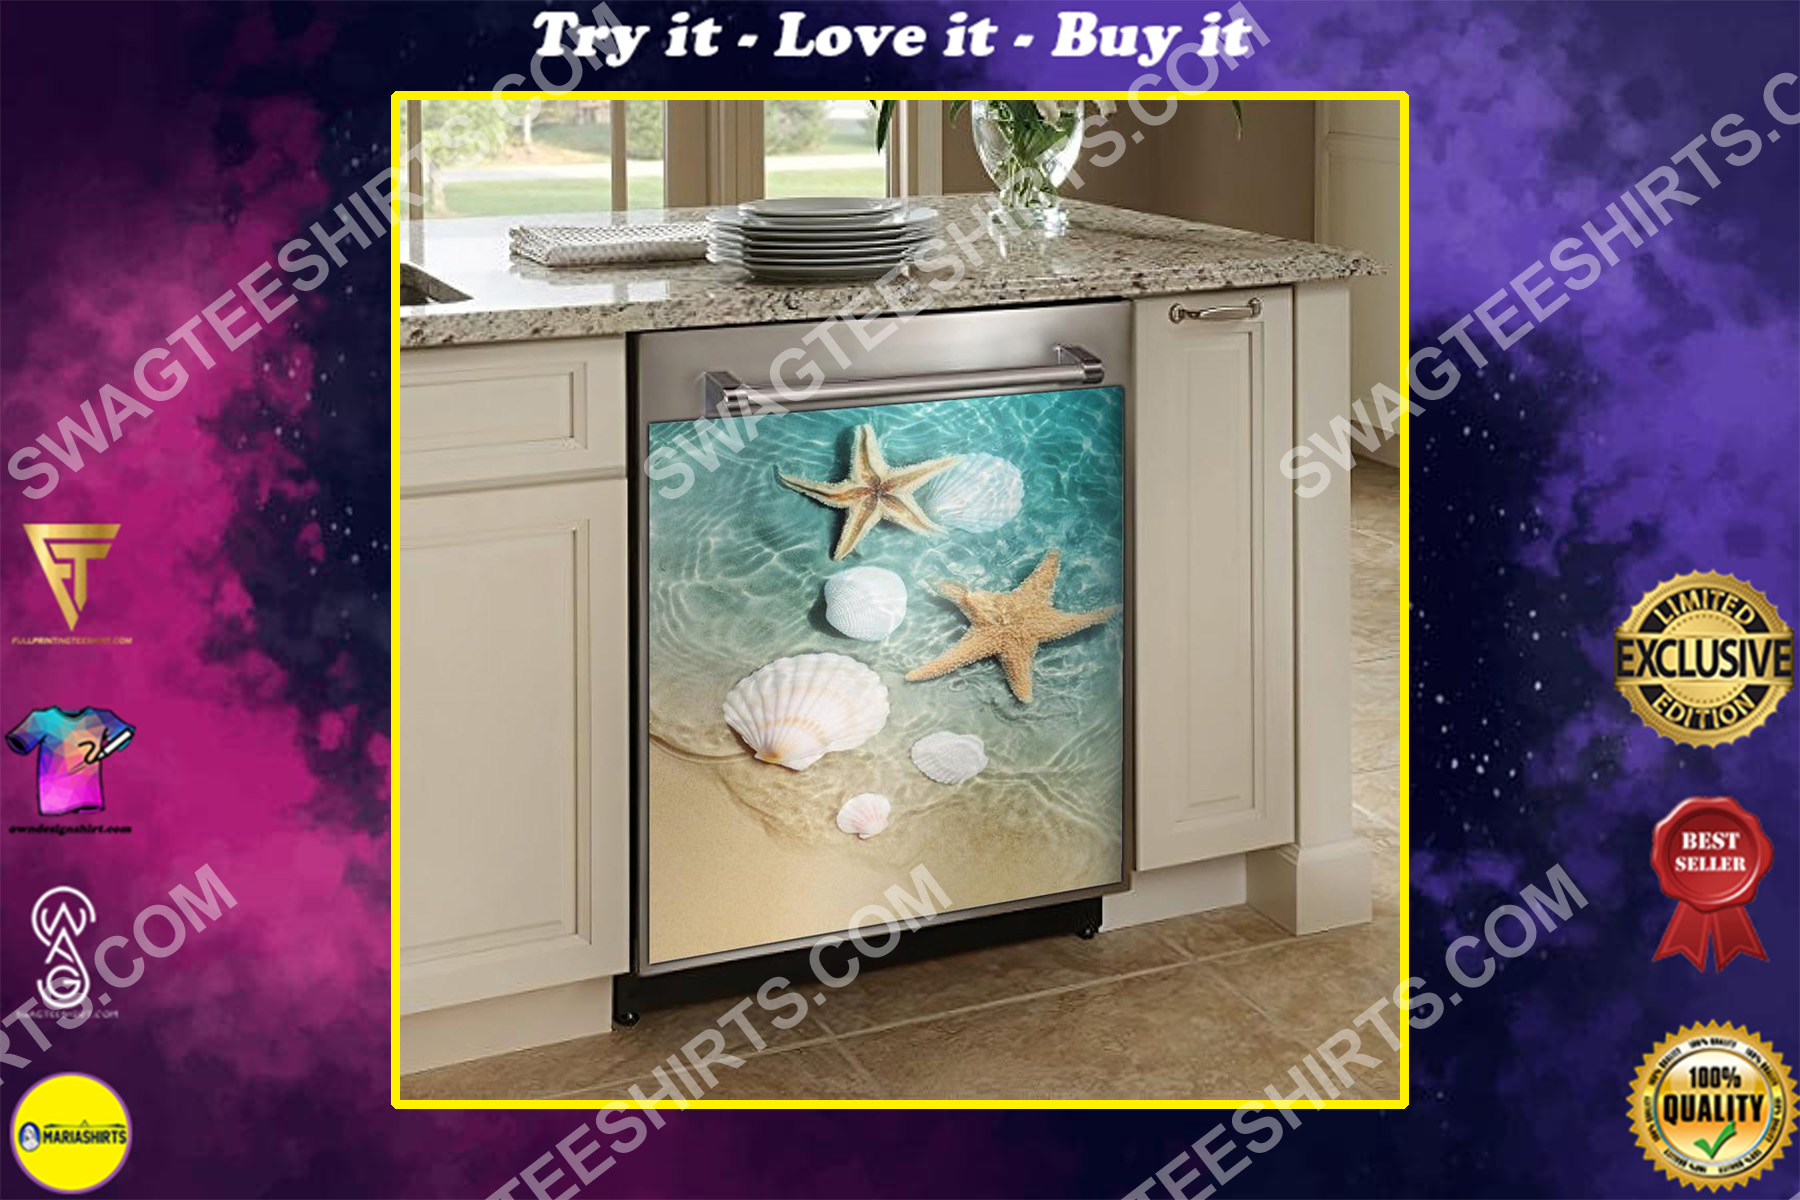 ocean starfish kitchen decorative dishwasher magnet cover